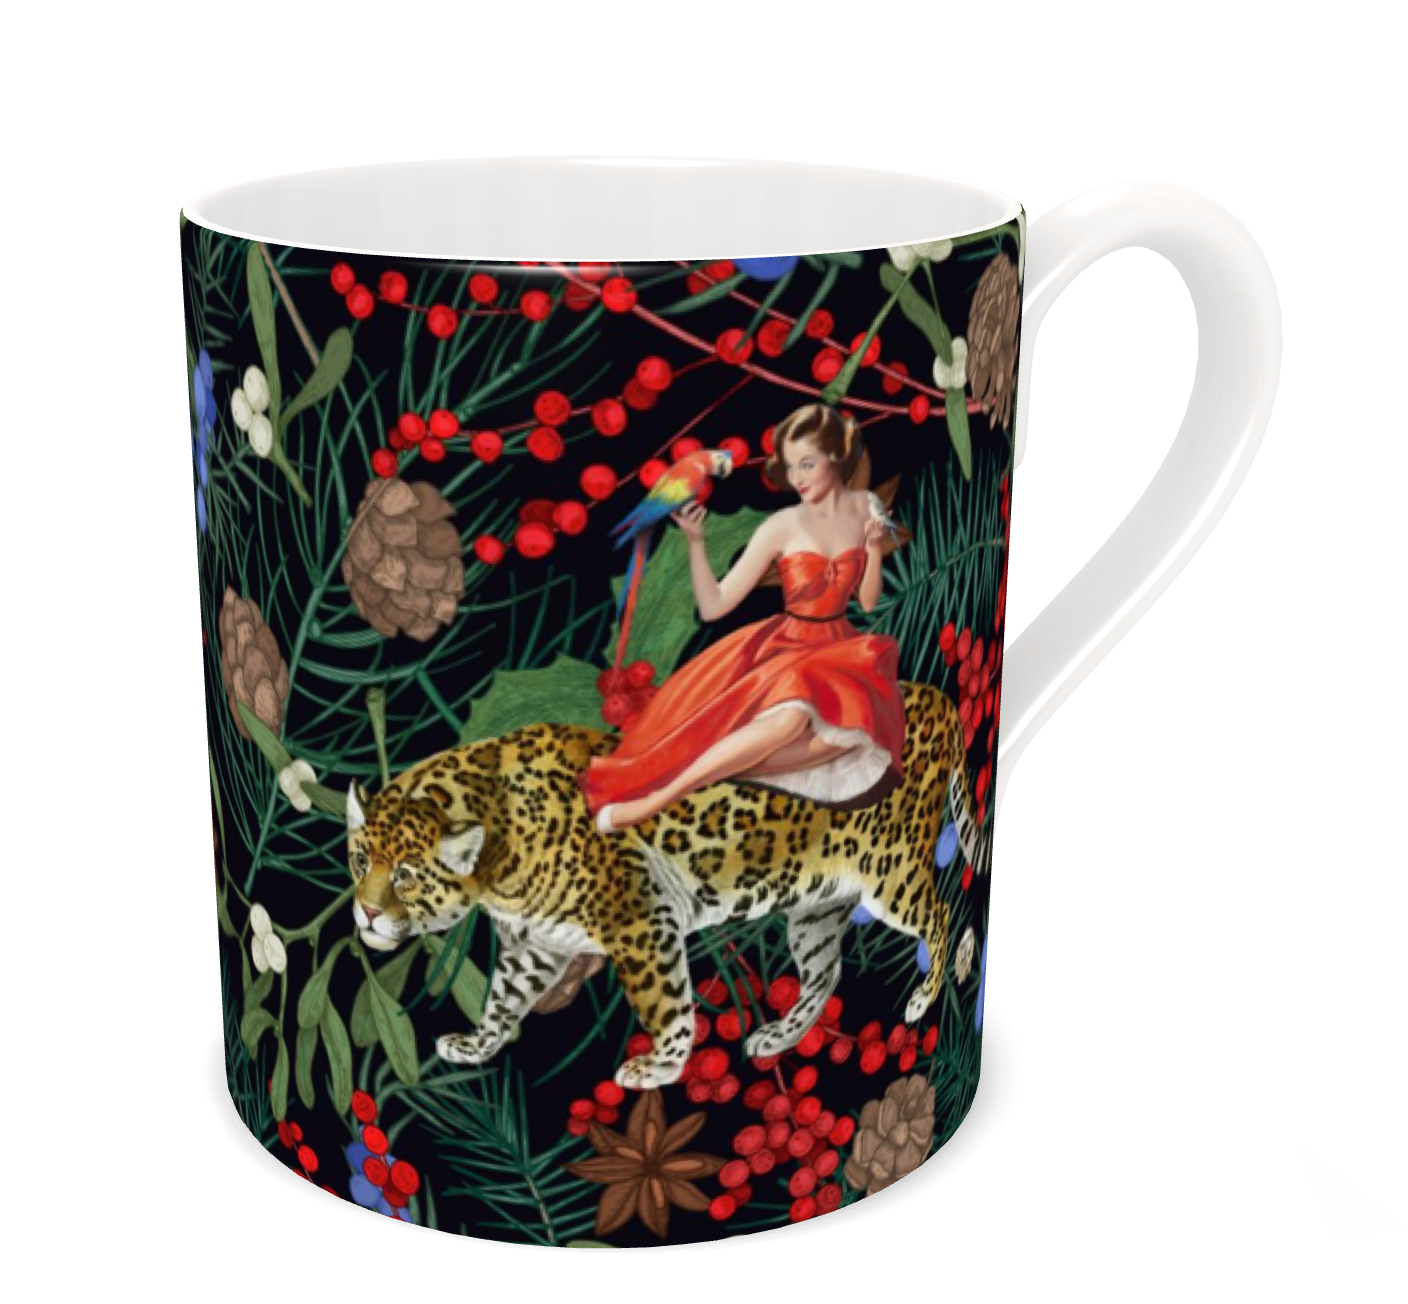 Luxury bone china mug in a maximalist festive animal fairytale design called - Festive Mary